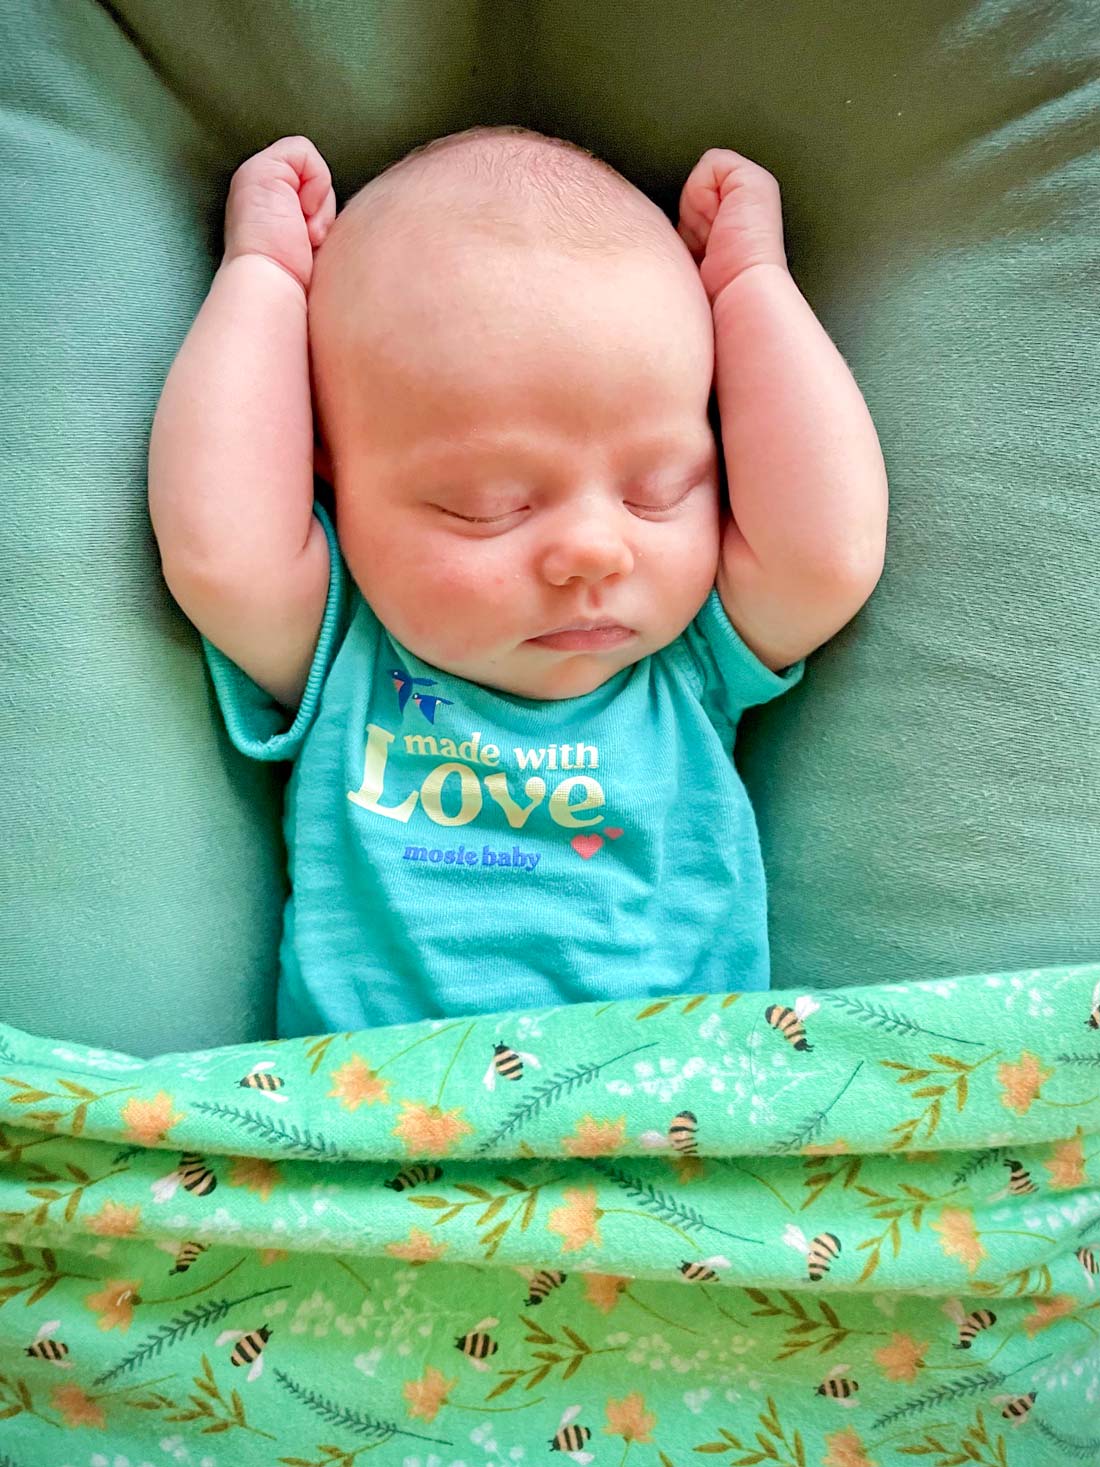 Newborn baby sleeps cozily in Mosie Baby onesie and big pillow with green blanket